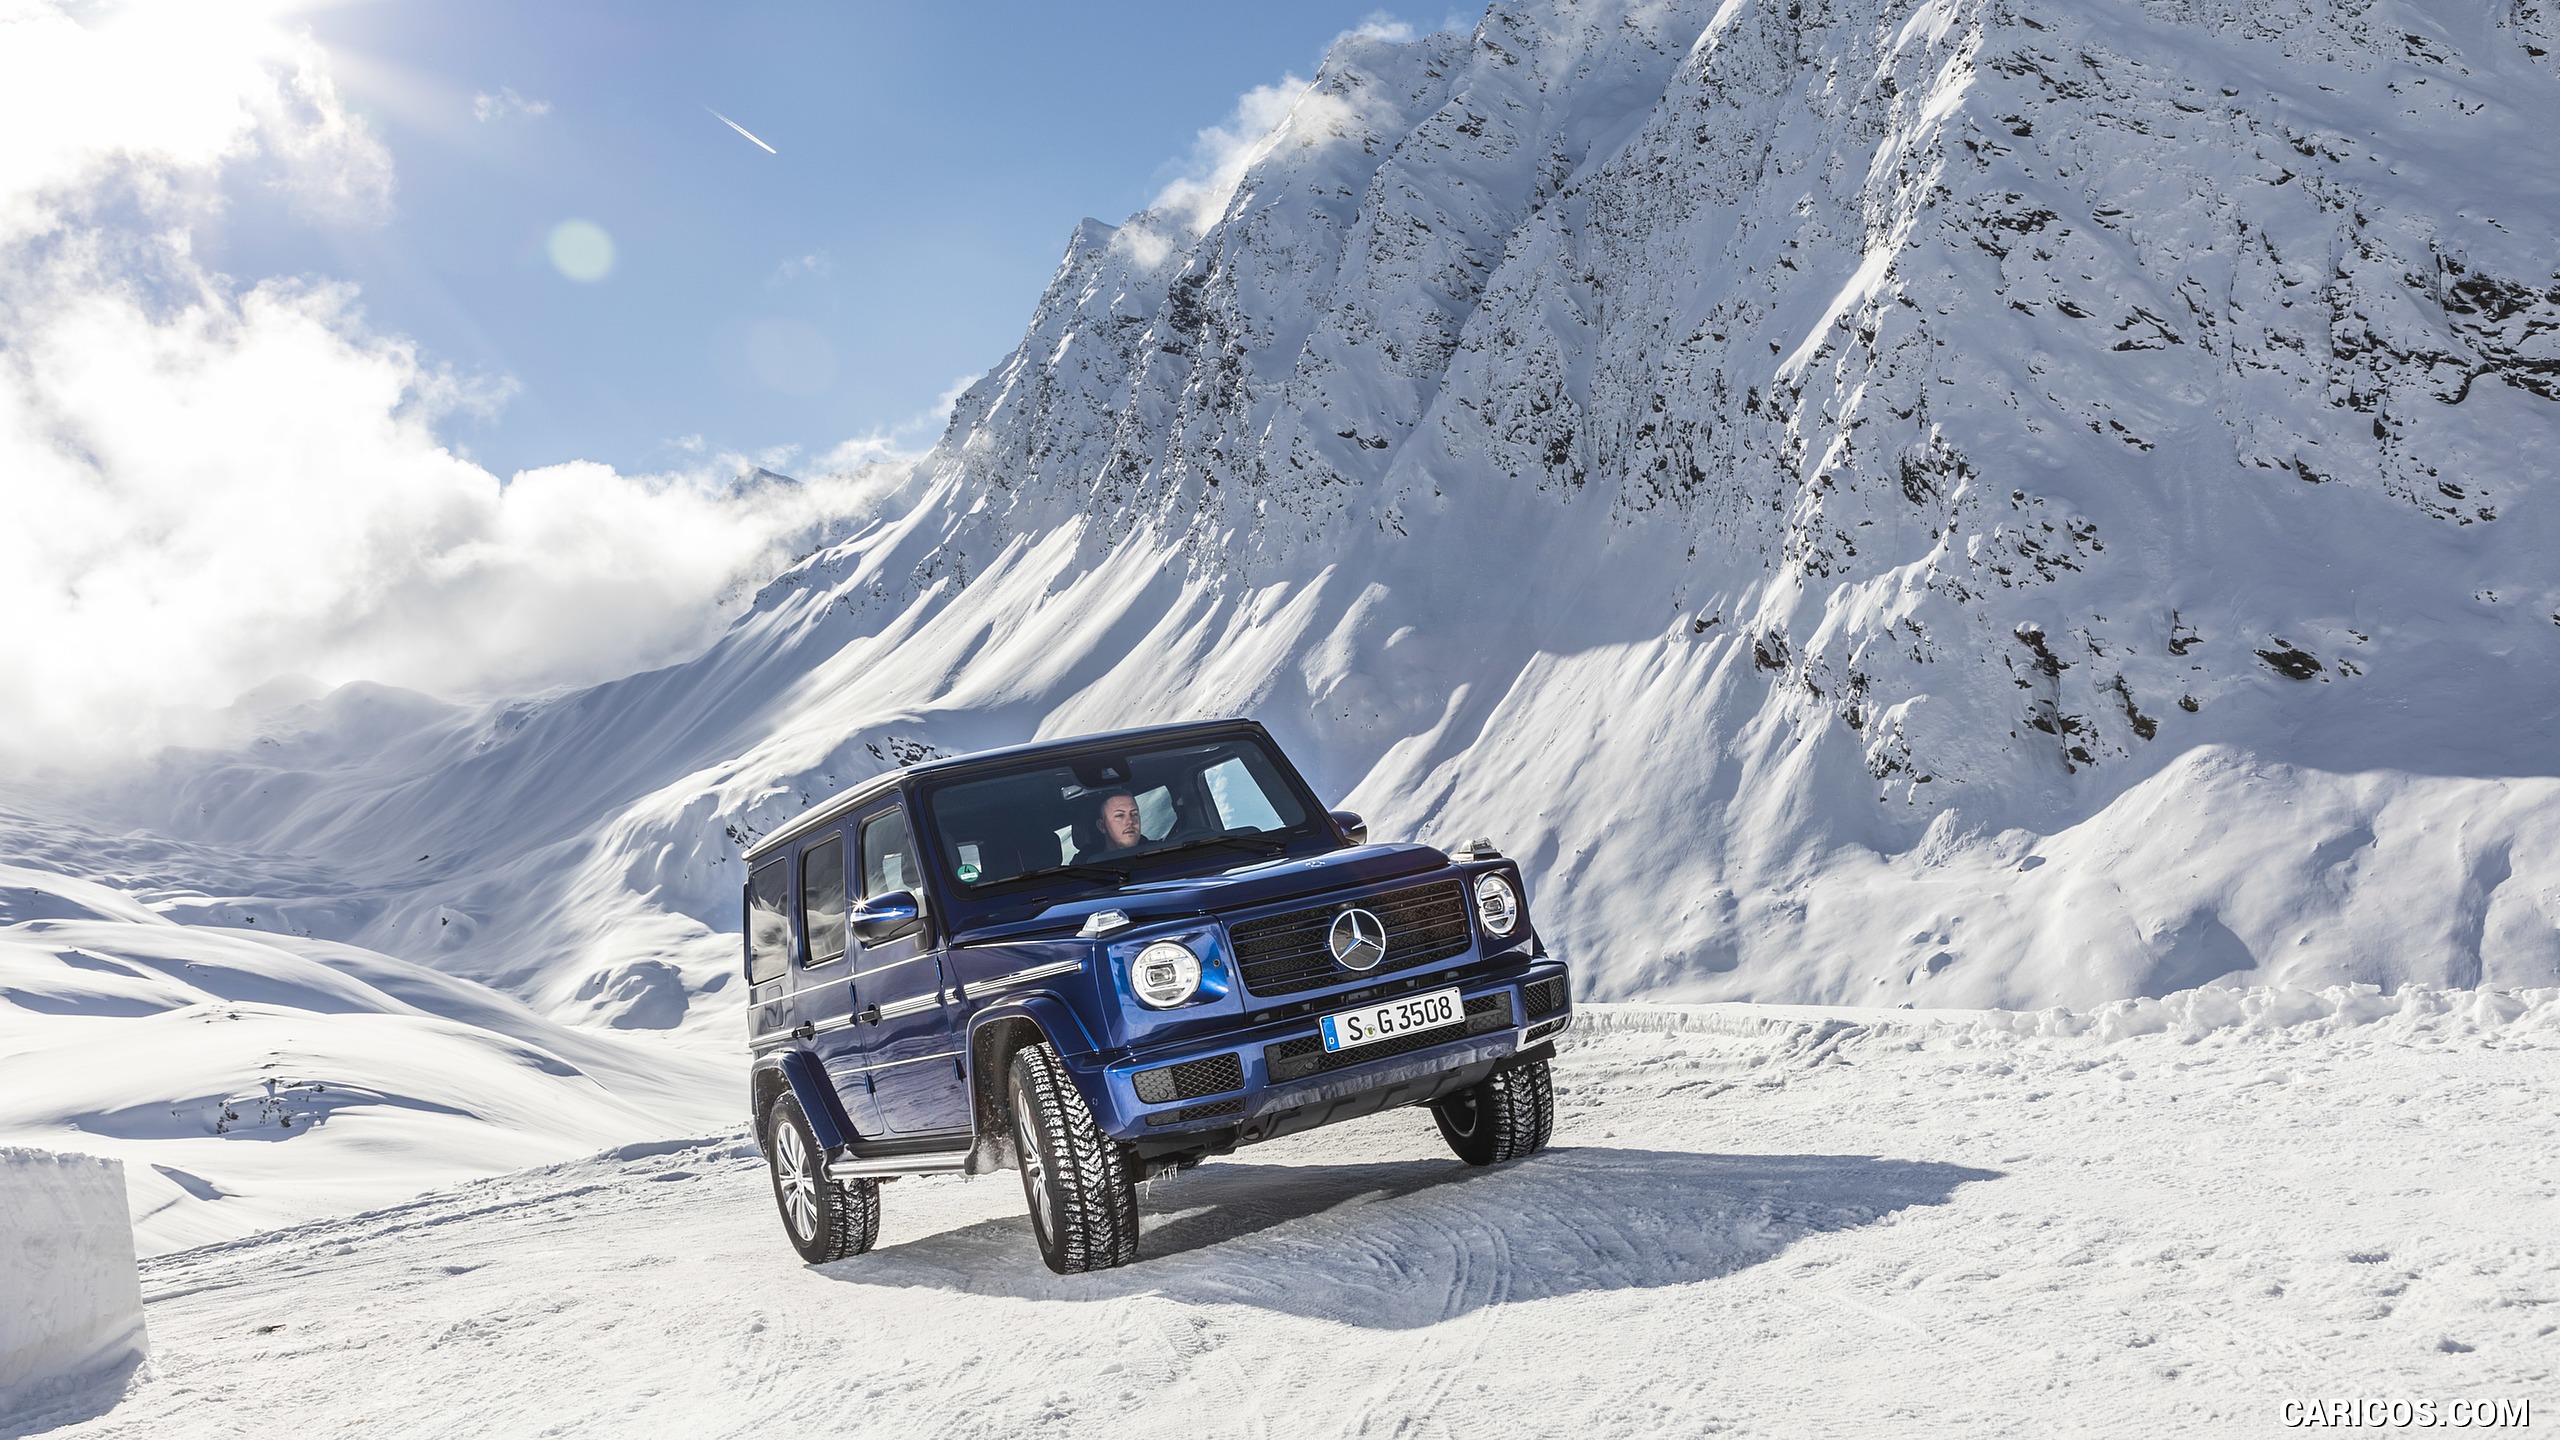 2019 Mercedes-Benz G 350 d (Brilliant Blue Metallic) - In Snow - Front, #27 of 51